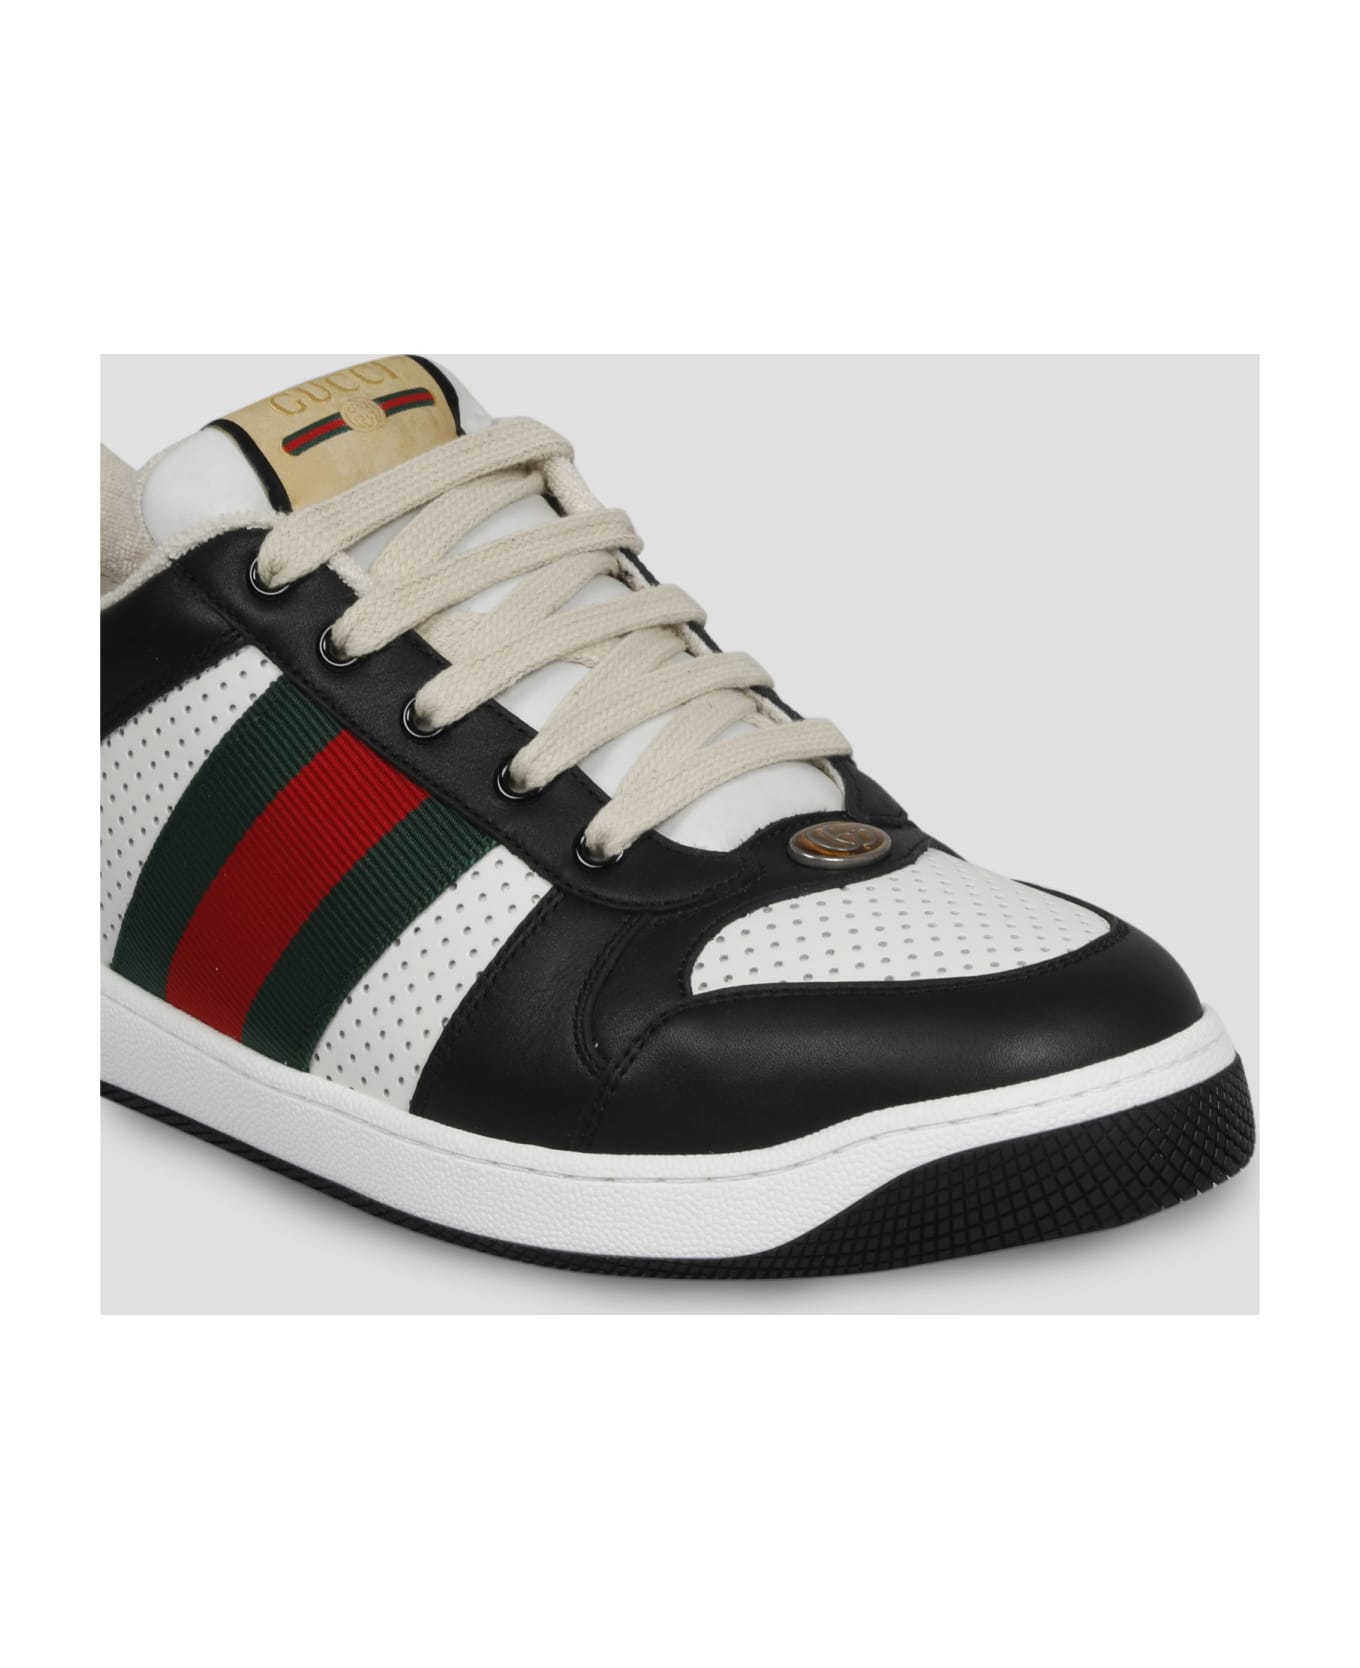 Gucci Screener Sneakers - White